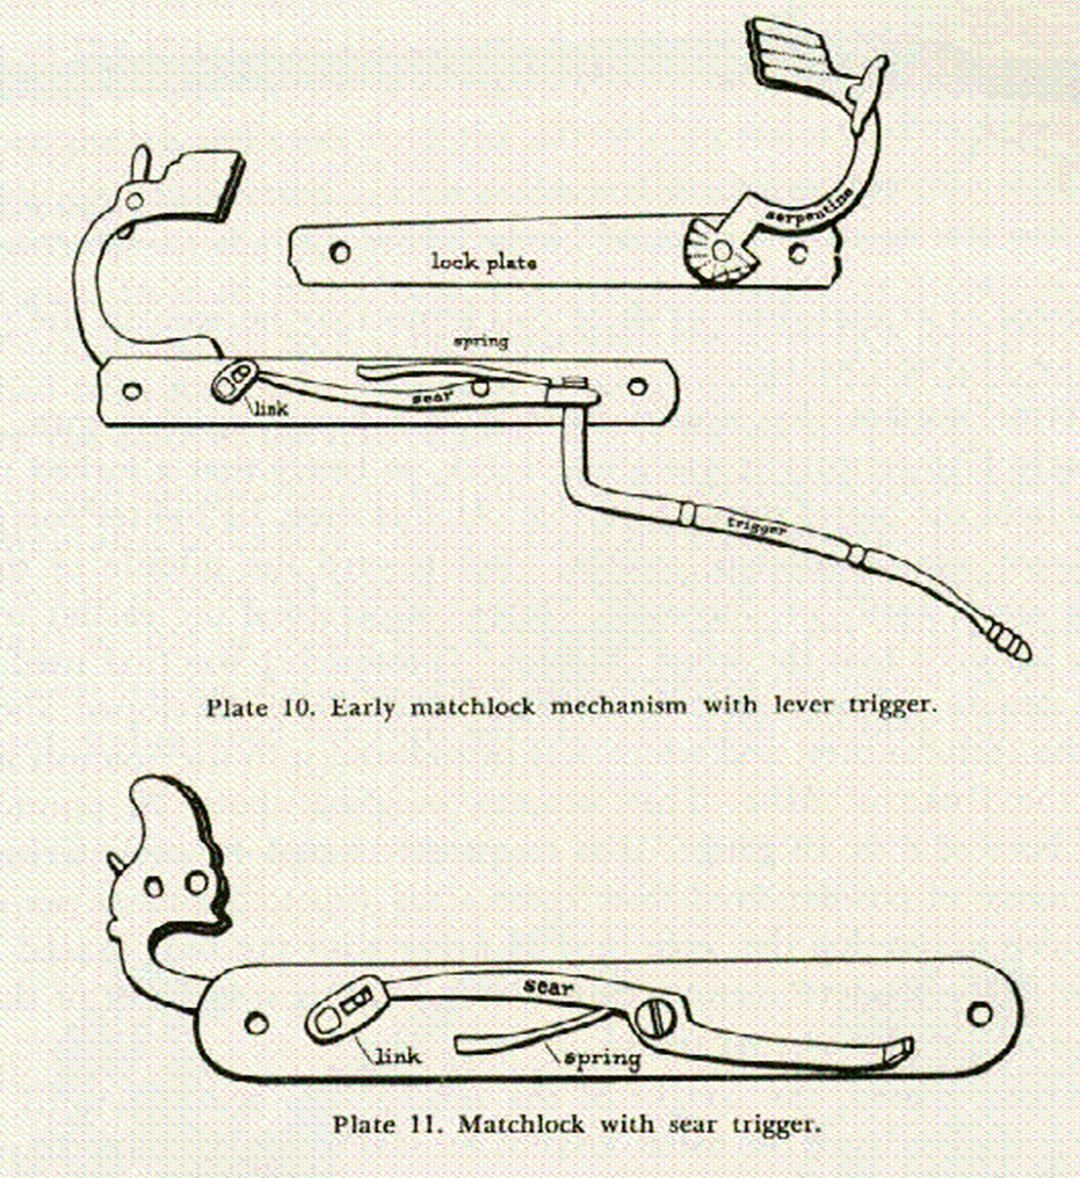 Matchlock-lever-trigger-mechanism-and-sear-trigger